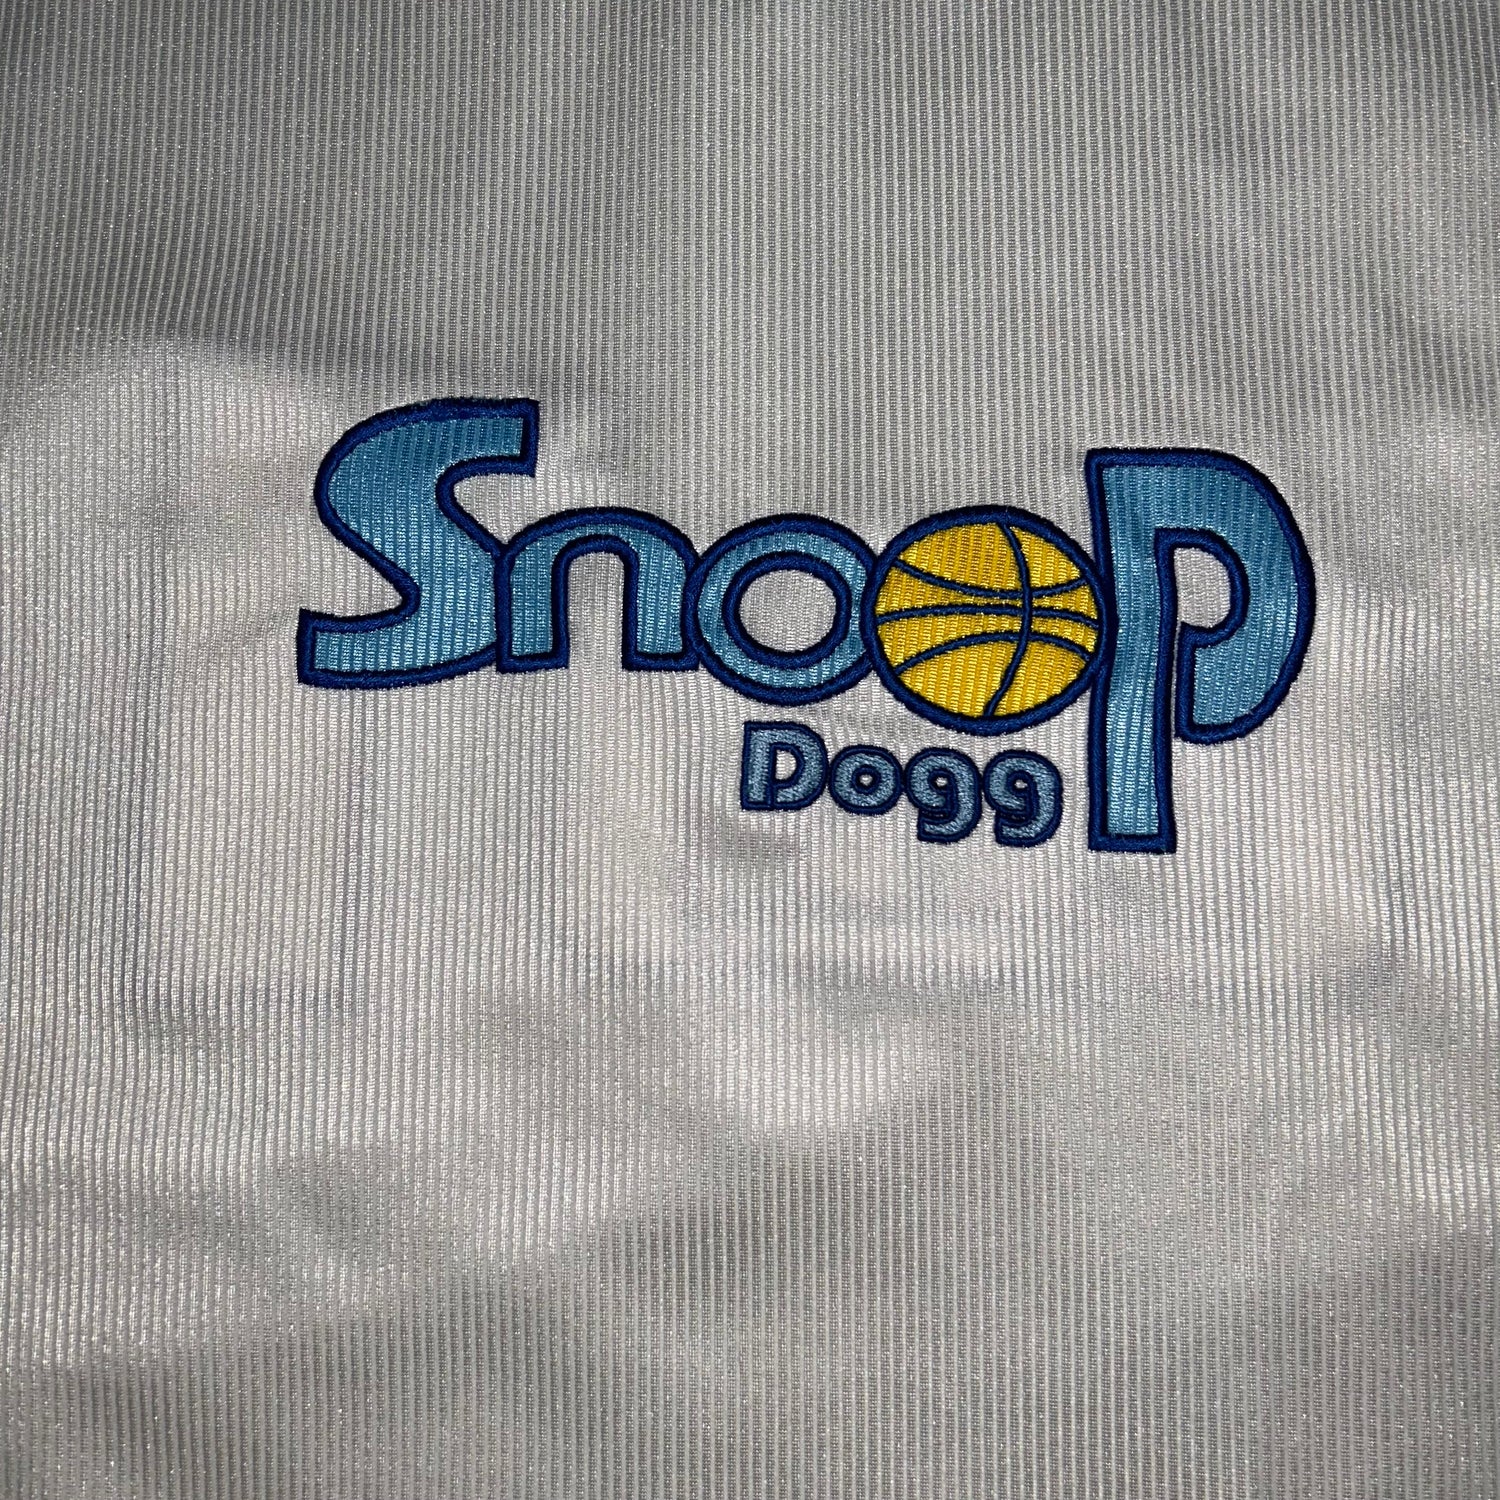 Snoop Dogg Clothing Vintage Jersey (XL/XXL)